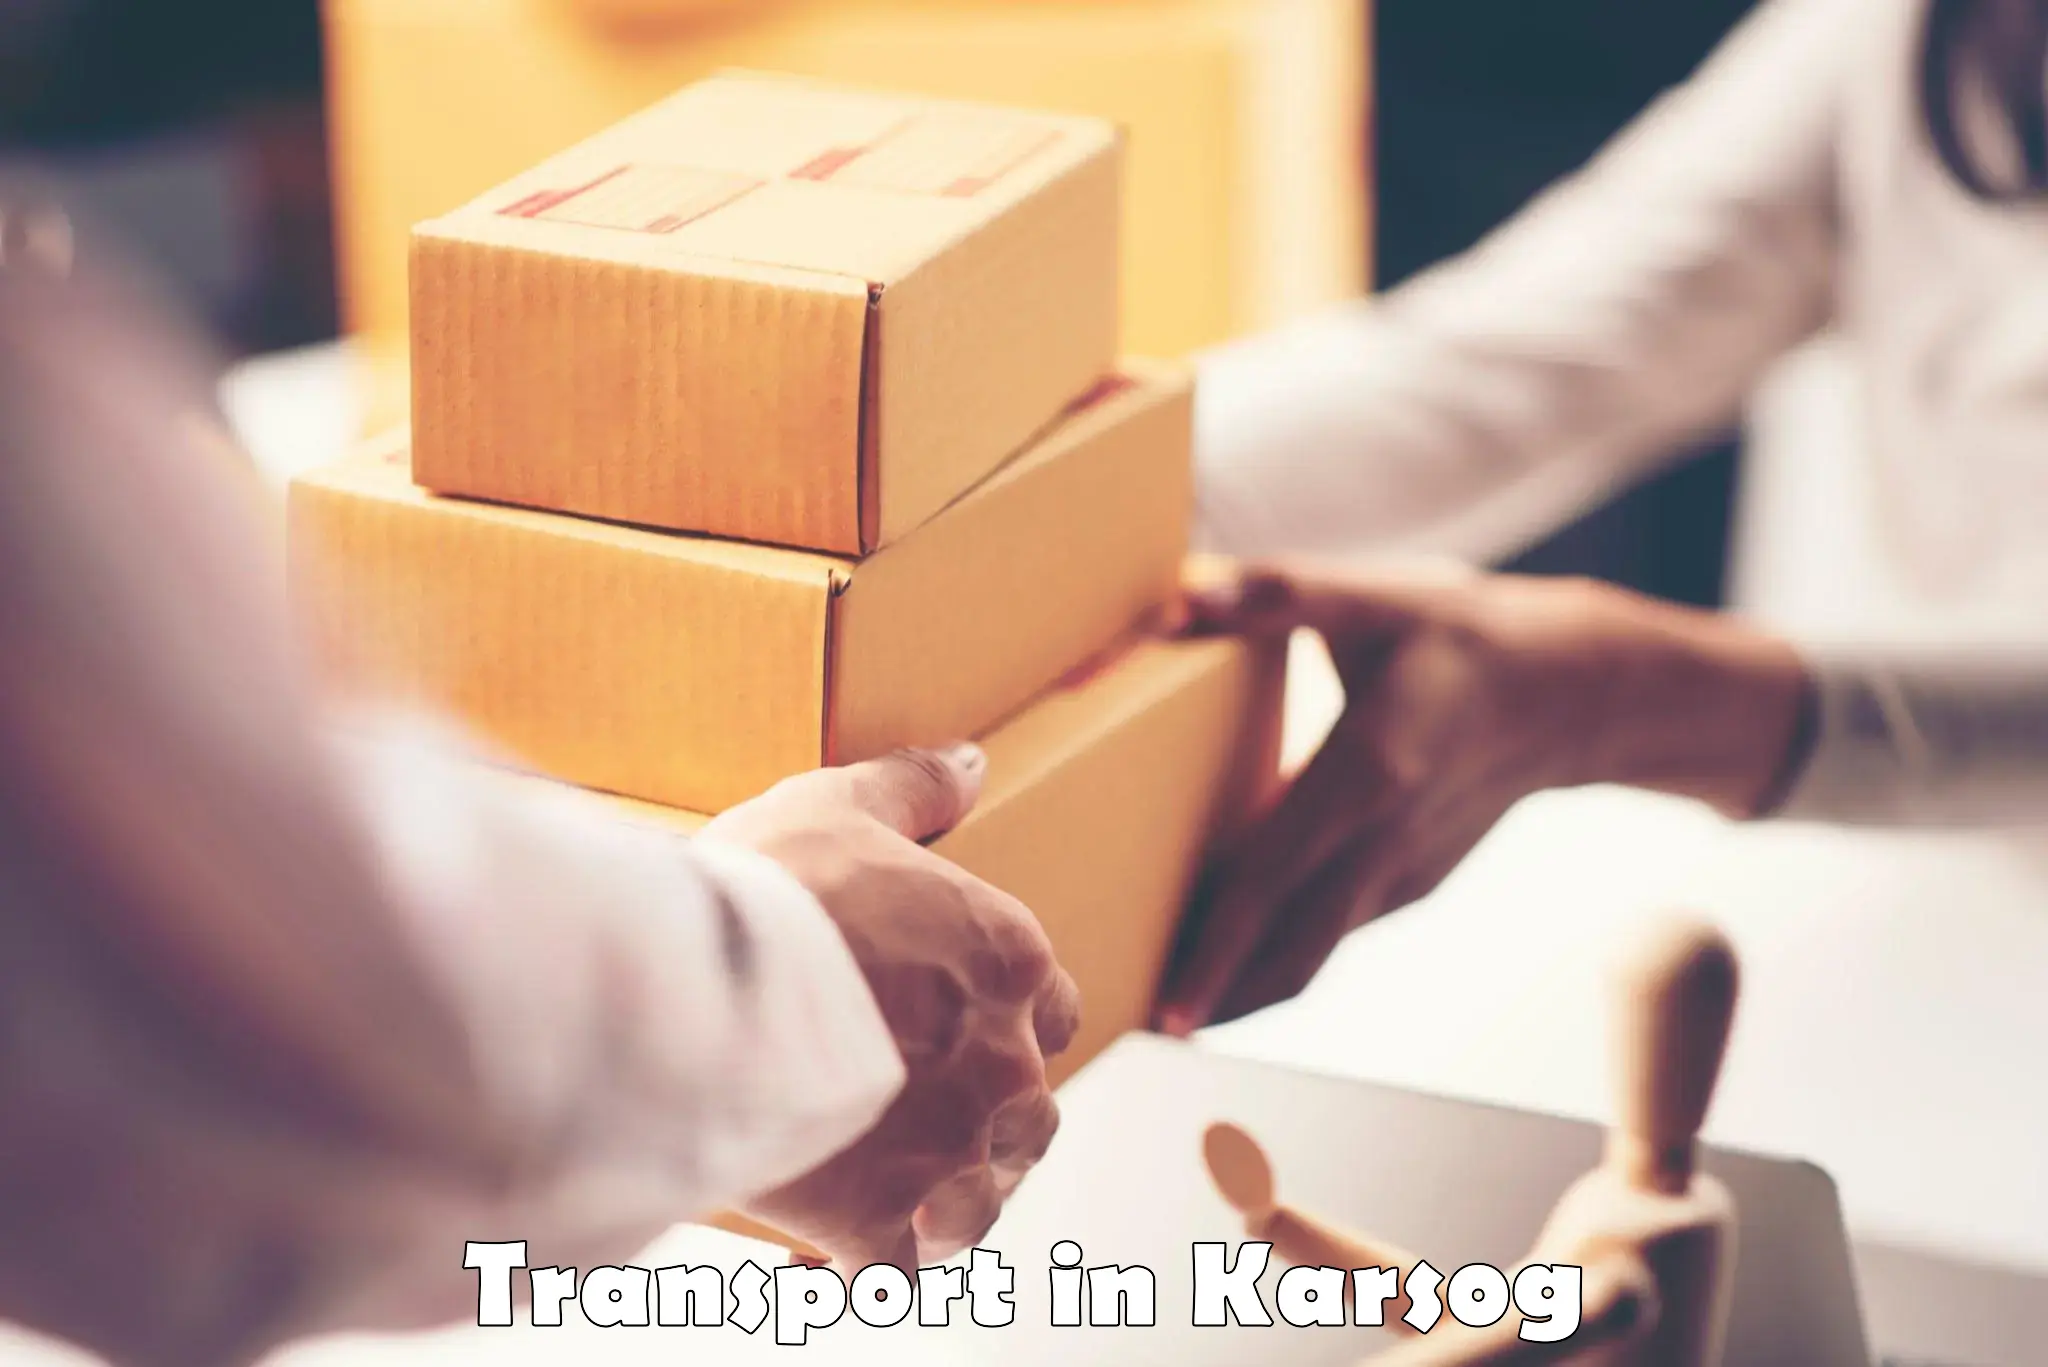 Transport in sharing in Karsog